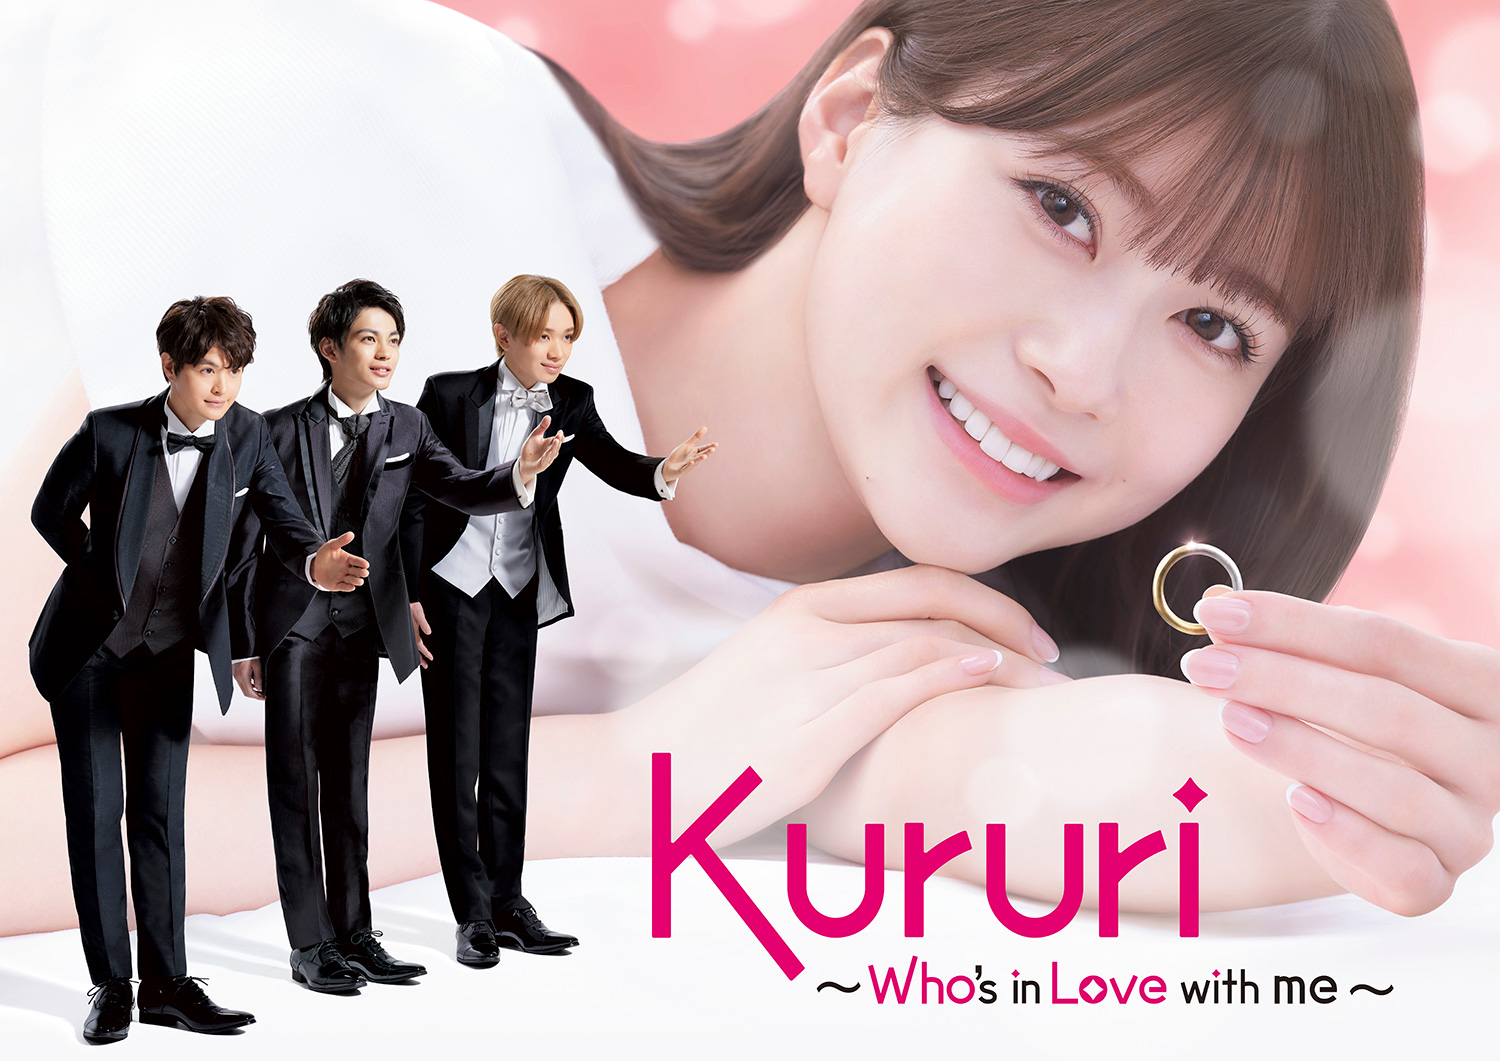 Kururi 〜Who’s in Love with me〜